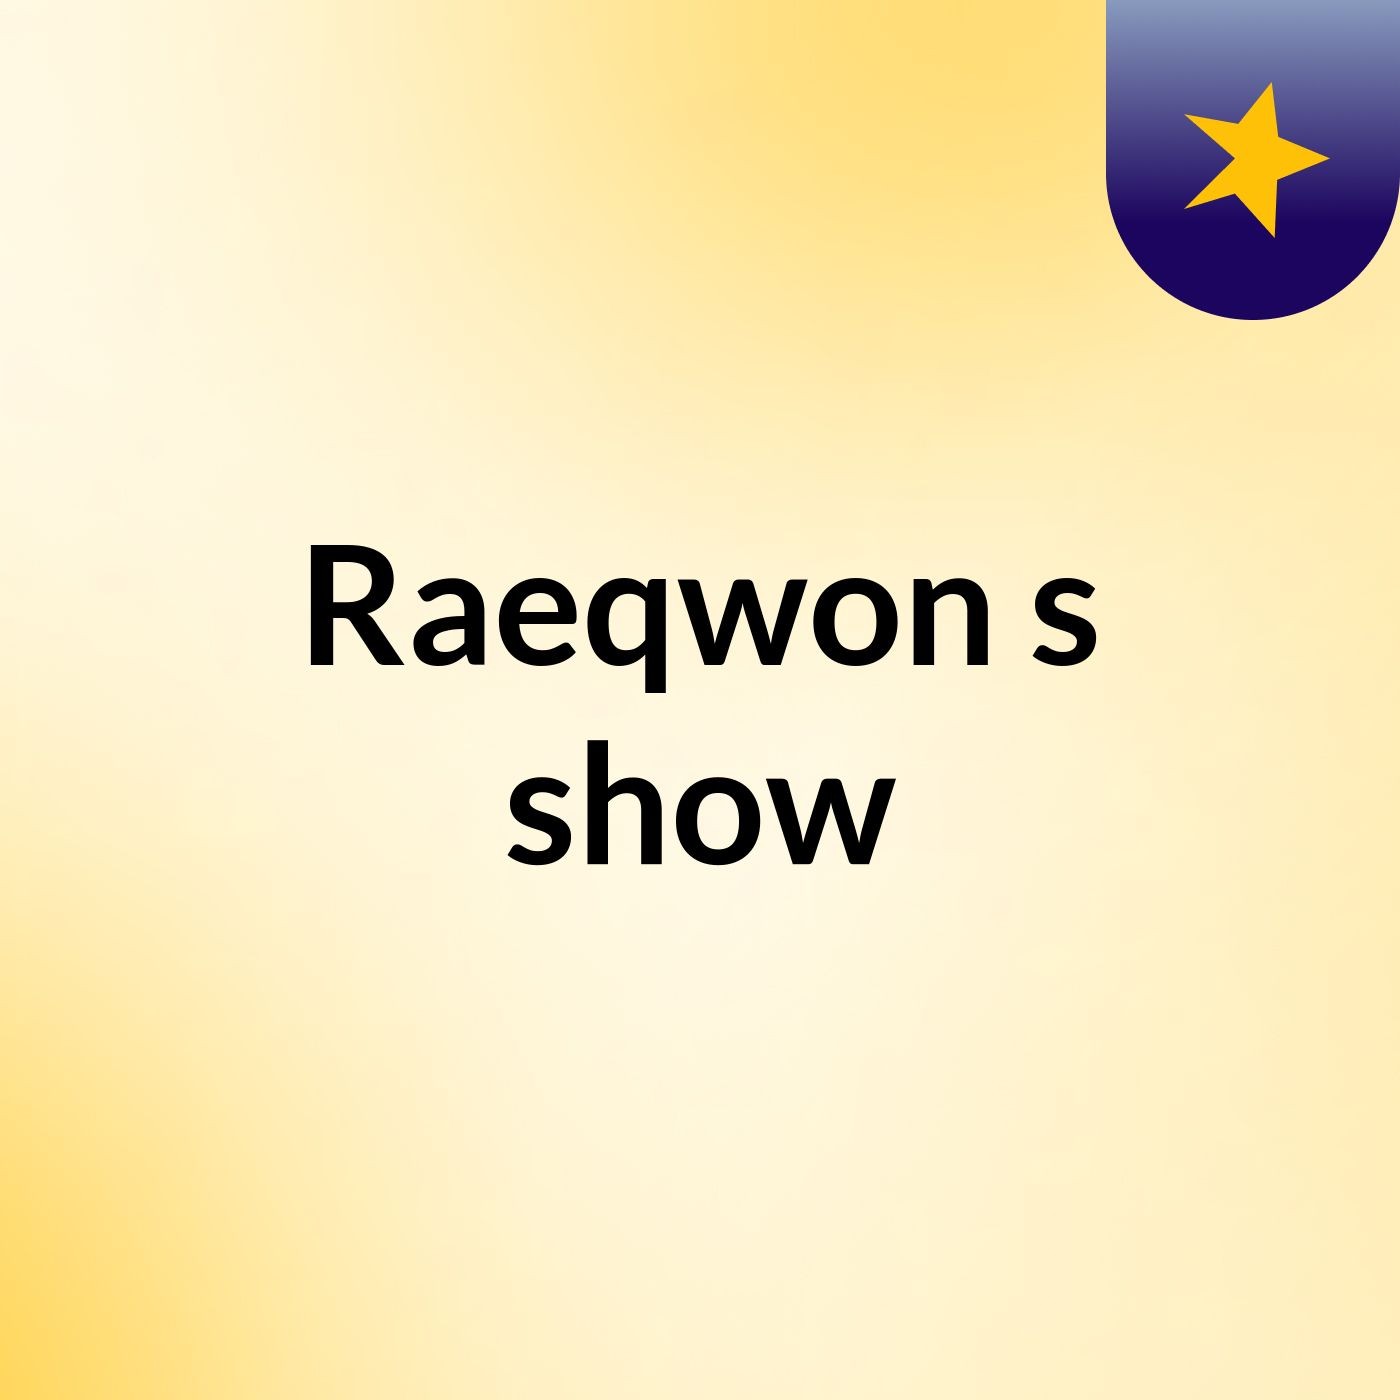 Raeqwon's show